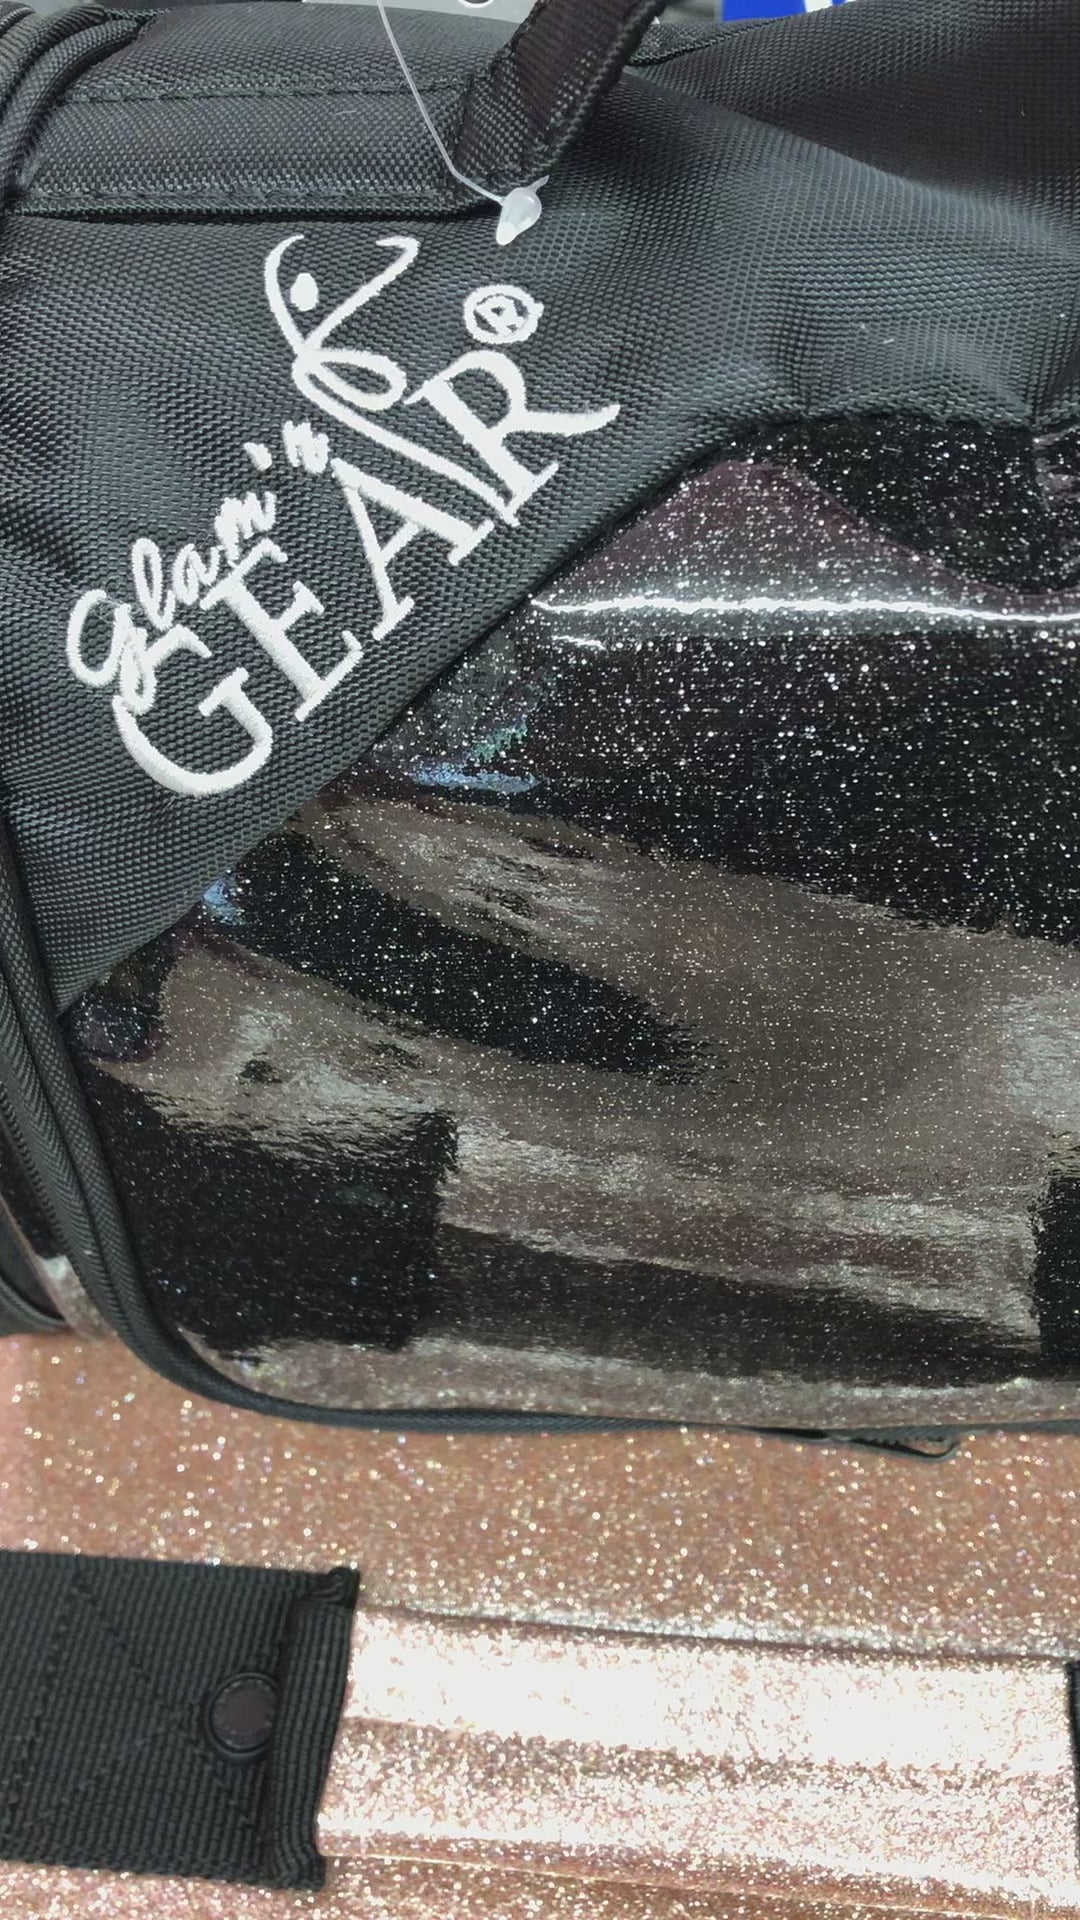 Glam'r Gear Hanging Travel Cosmetics Bag